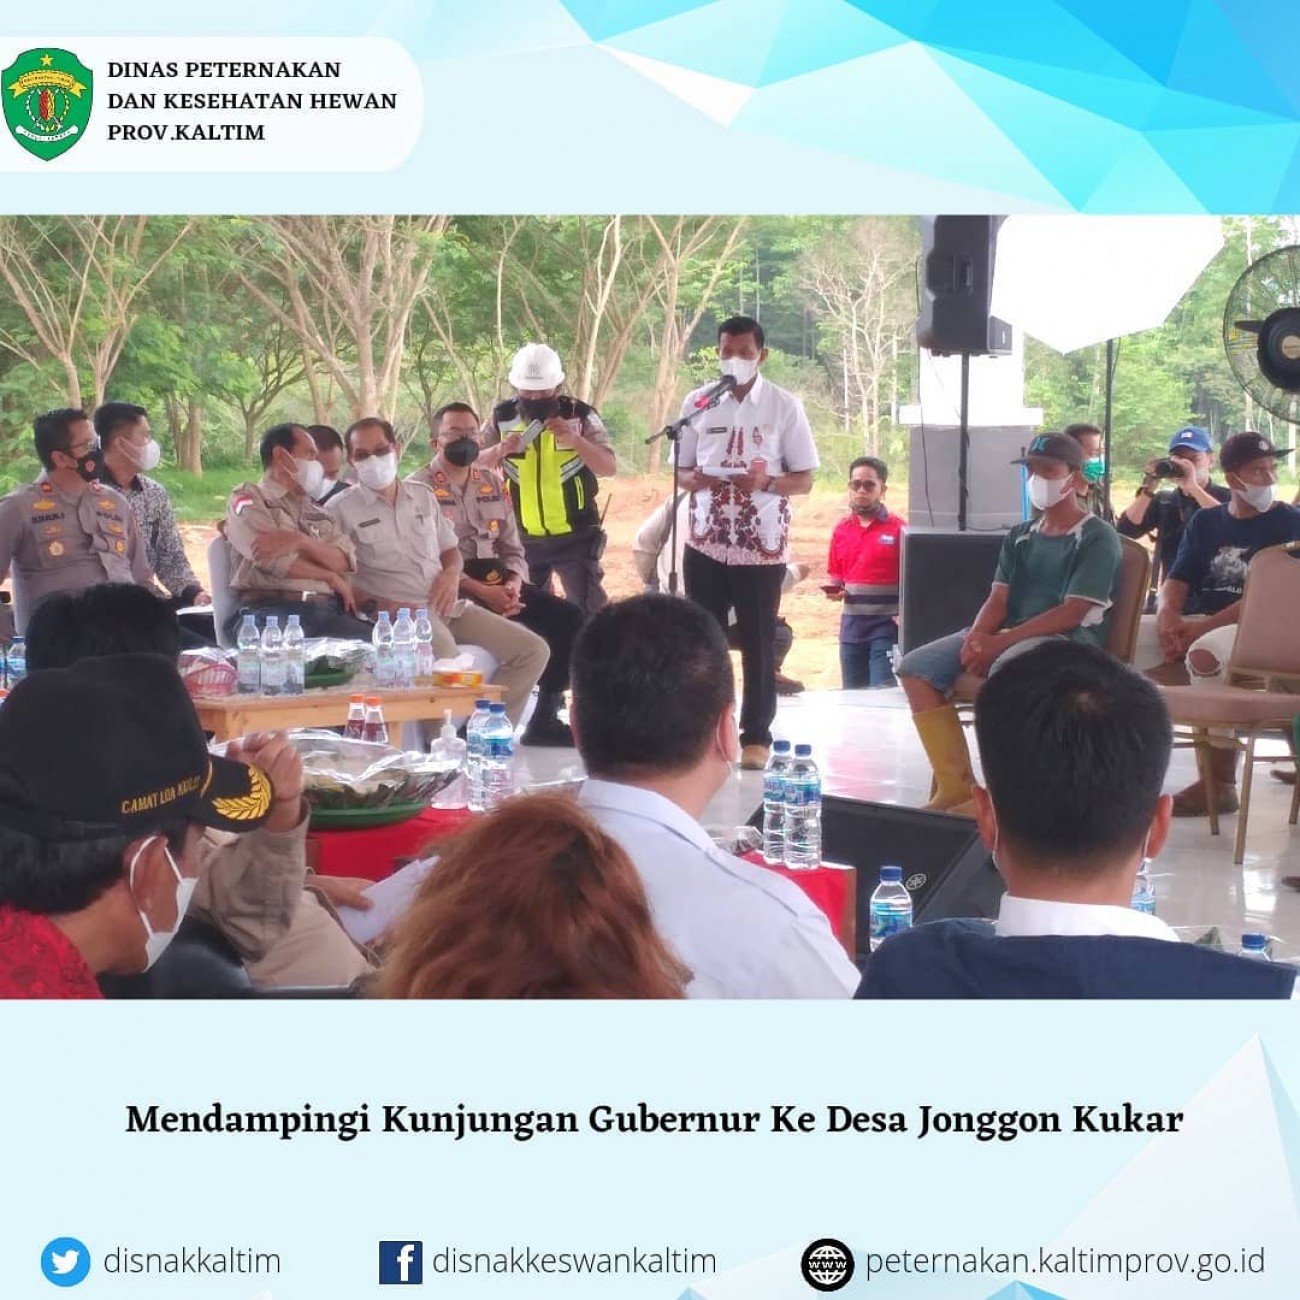 Kunjungan Gubernur di Desa Jonggon Jaya Kab. Kutai Kartanegara